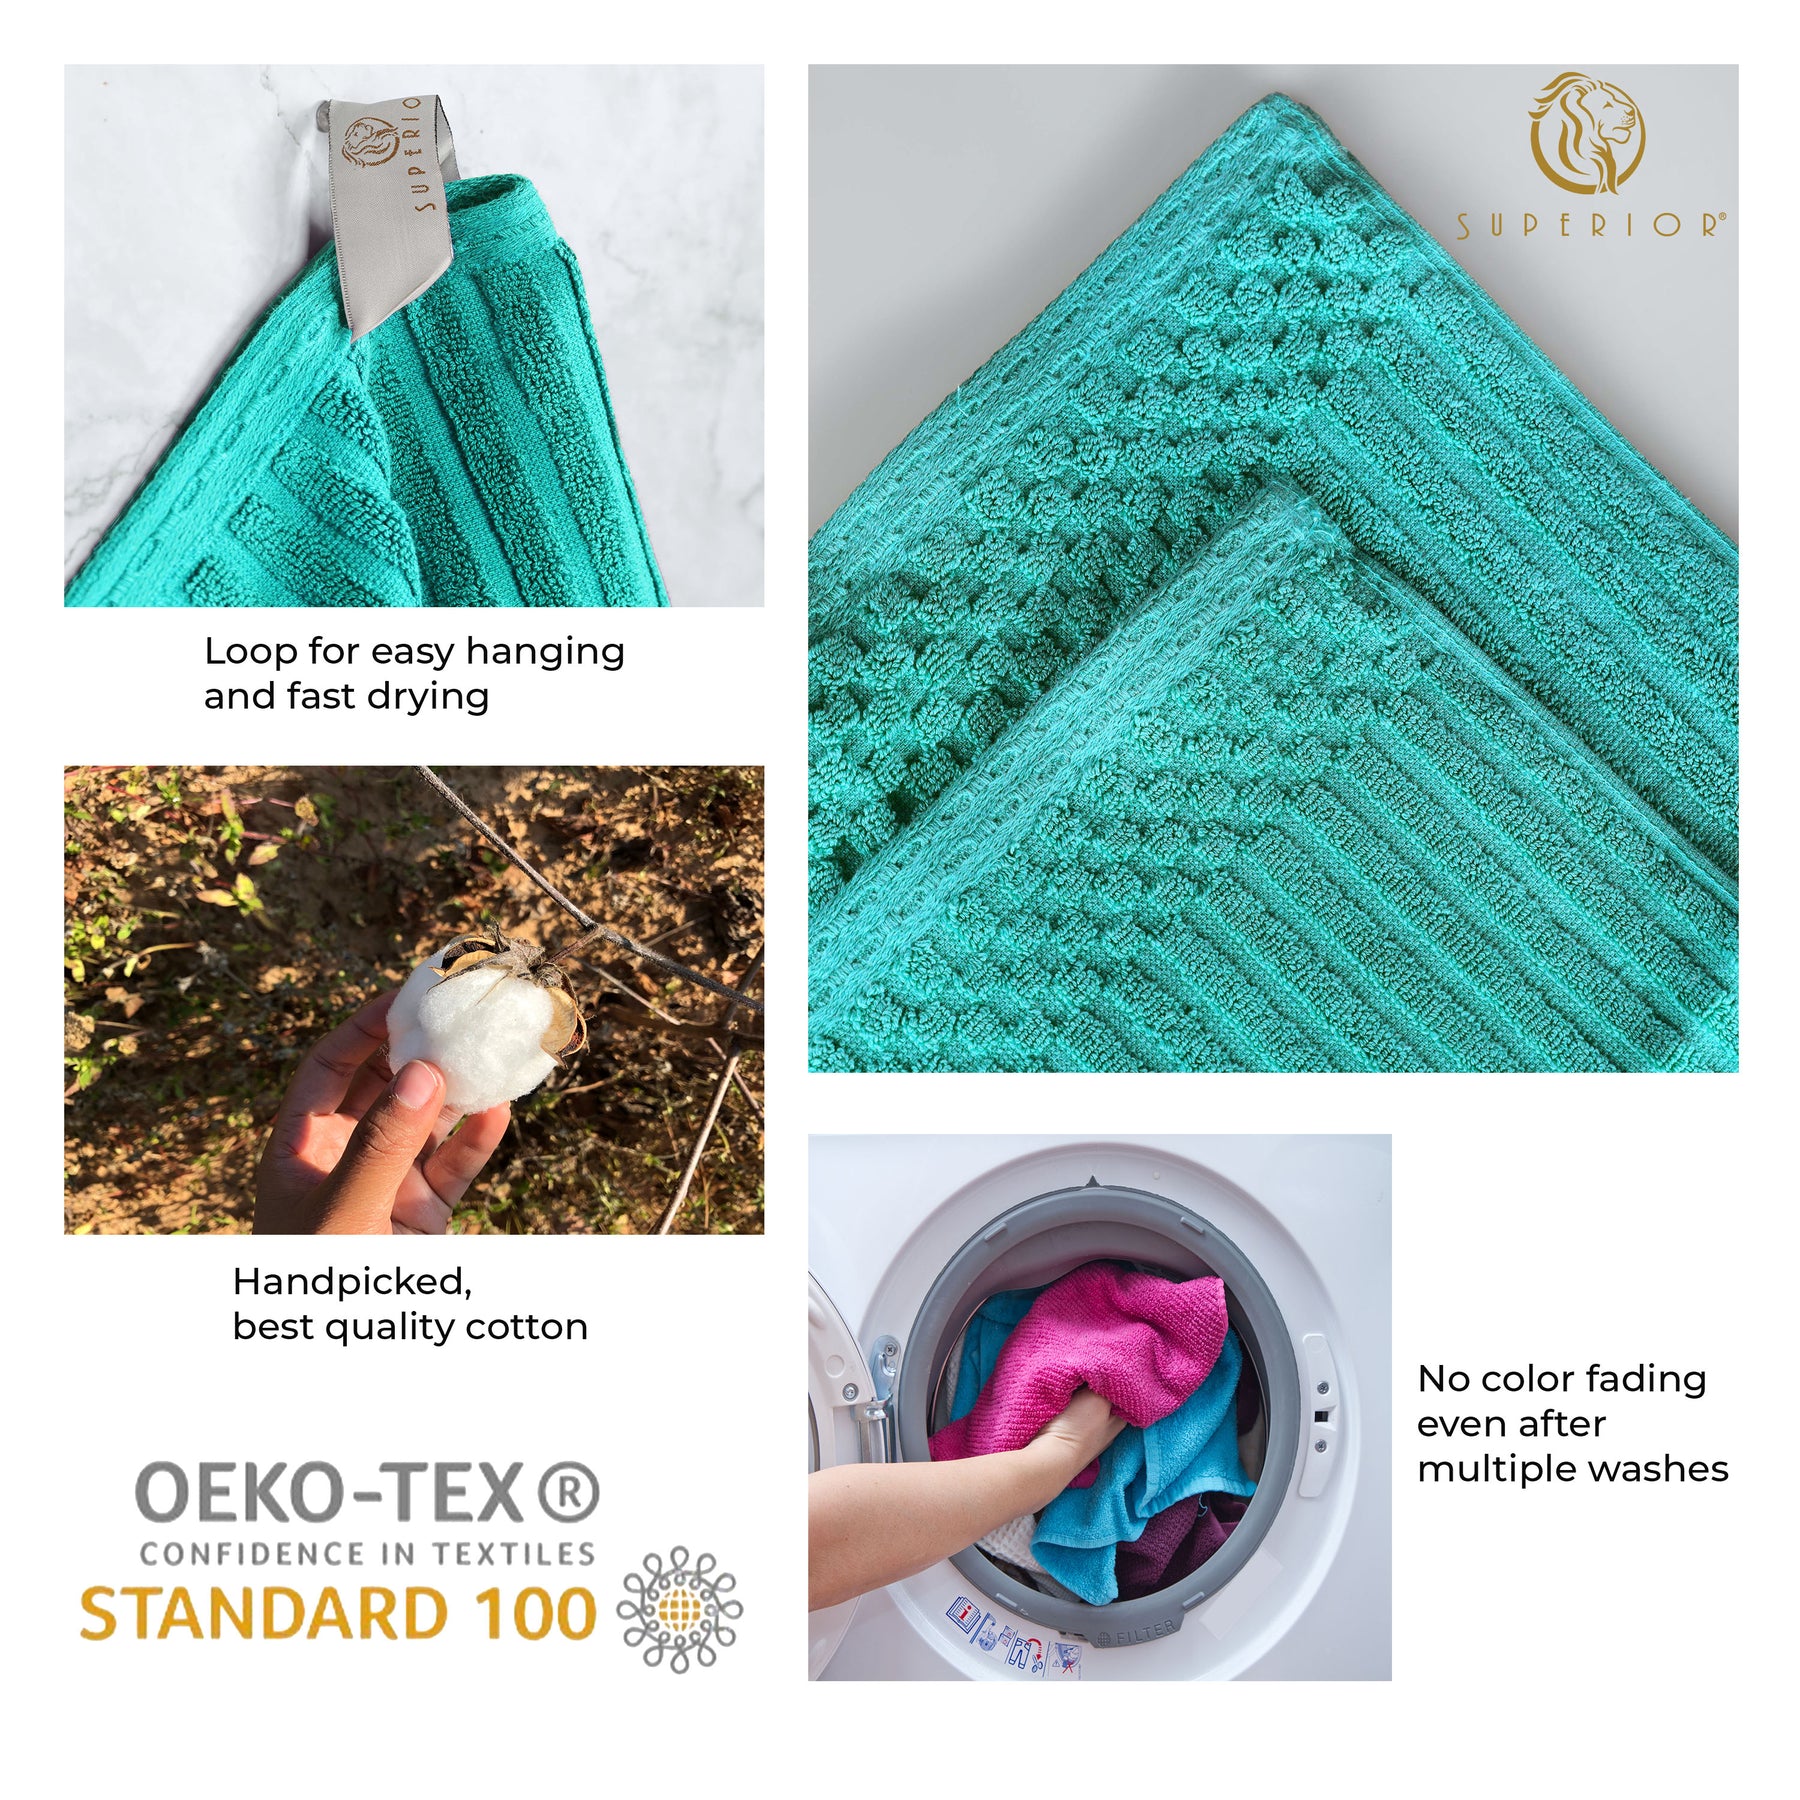 Superior Soho Ribbed Textured Cotton Ultra-Absorbent Bath Sheet & Bath Towel Set - Turquoise